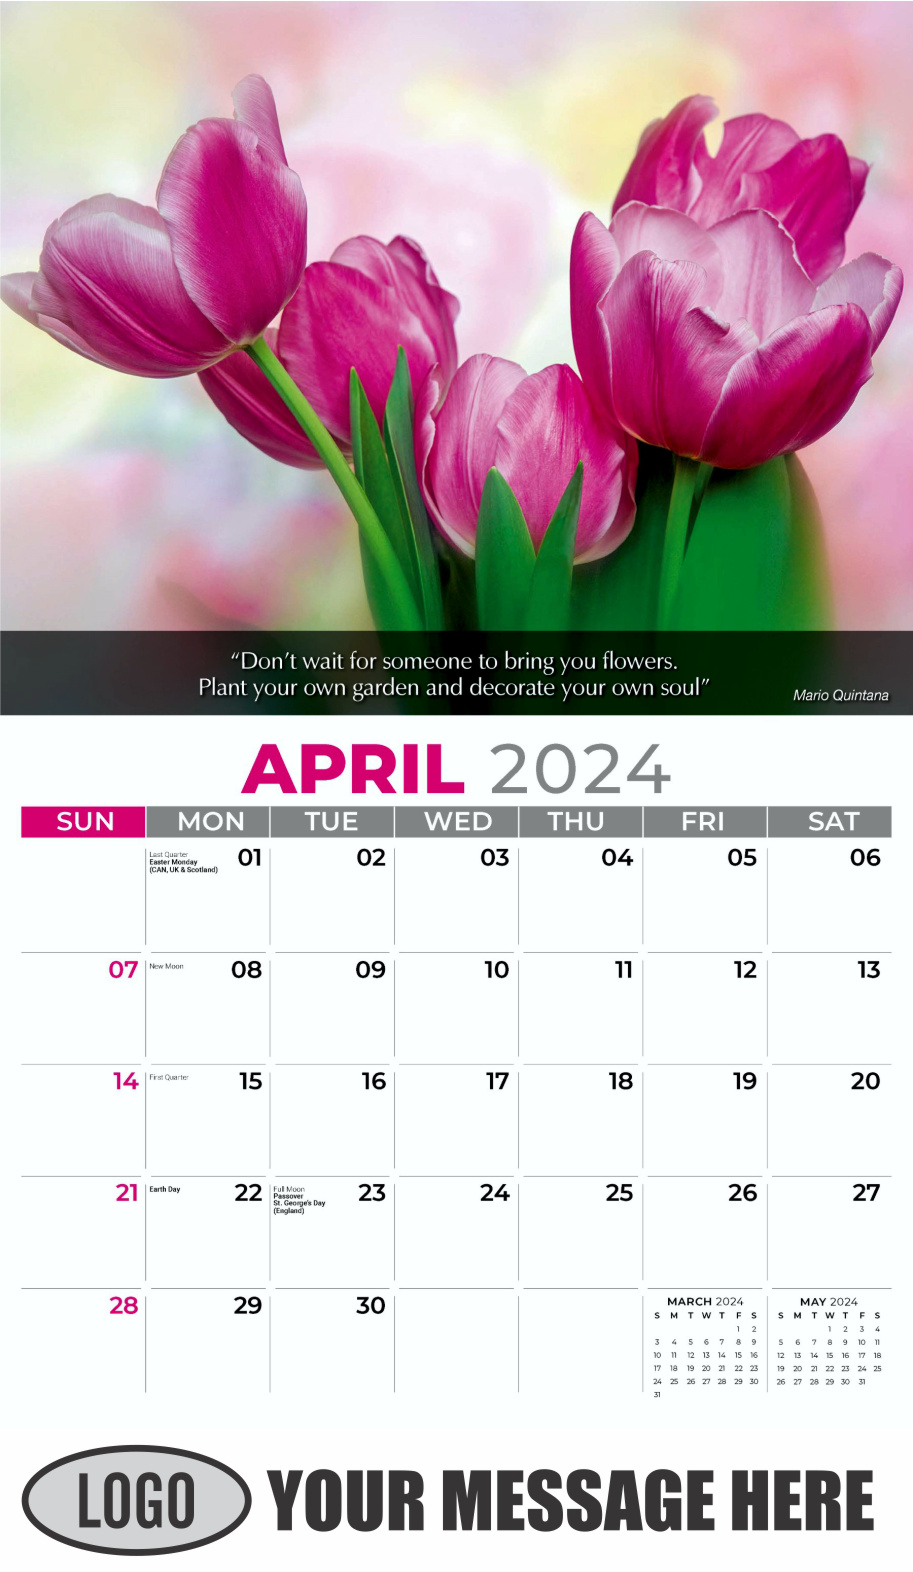 Flowers and Gardens 2024 Business Advertising Calendar - April